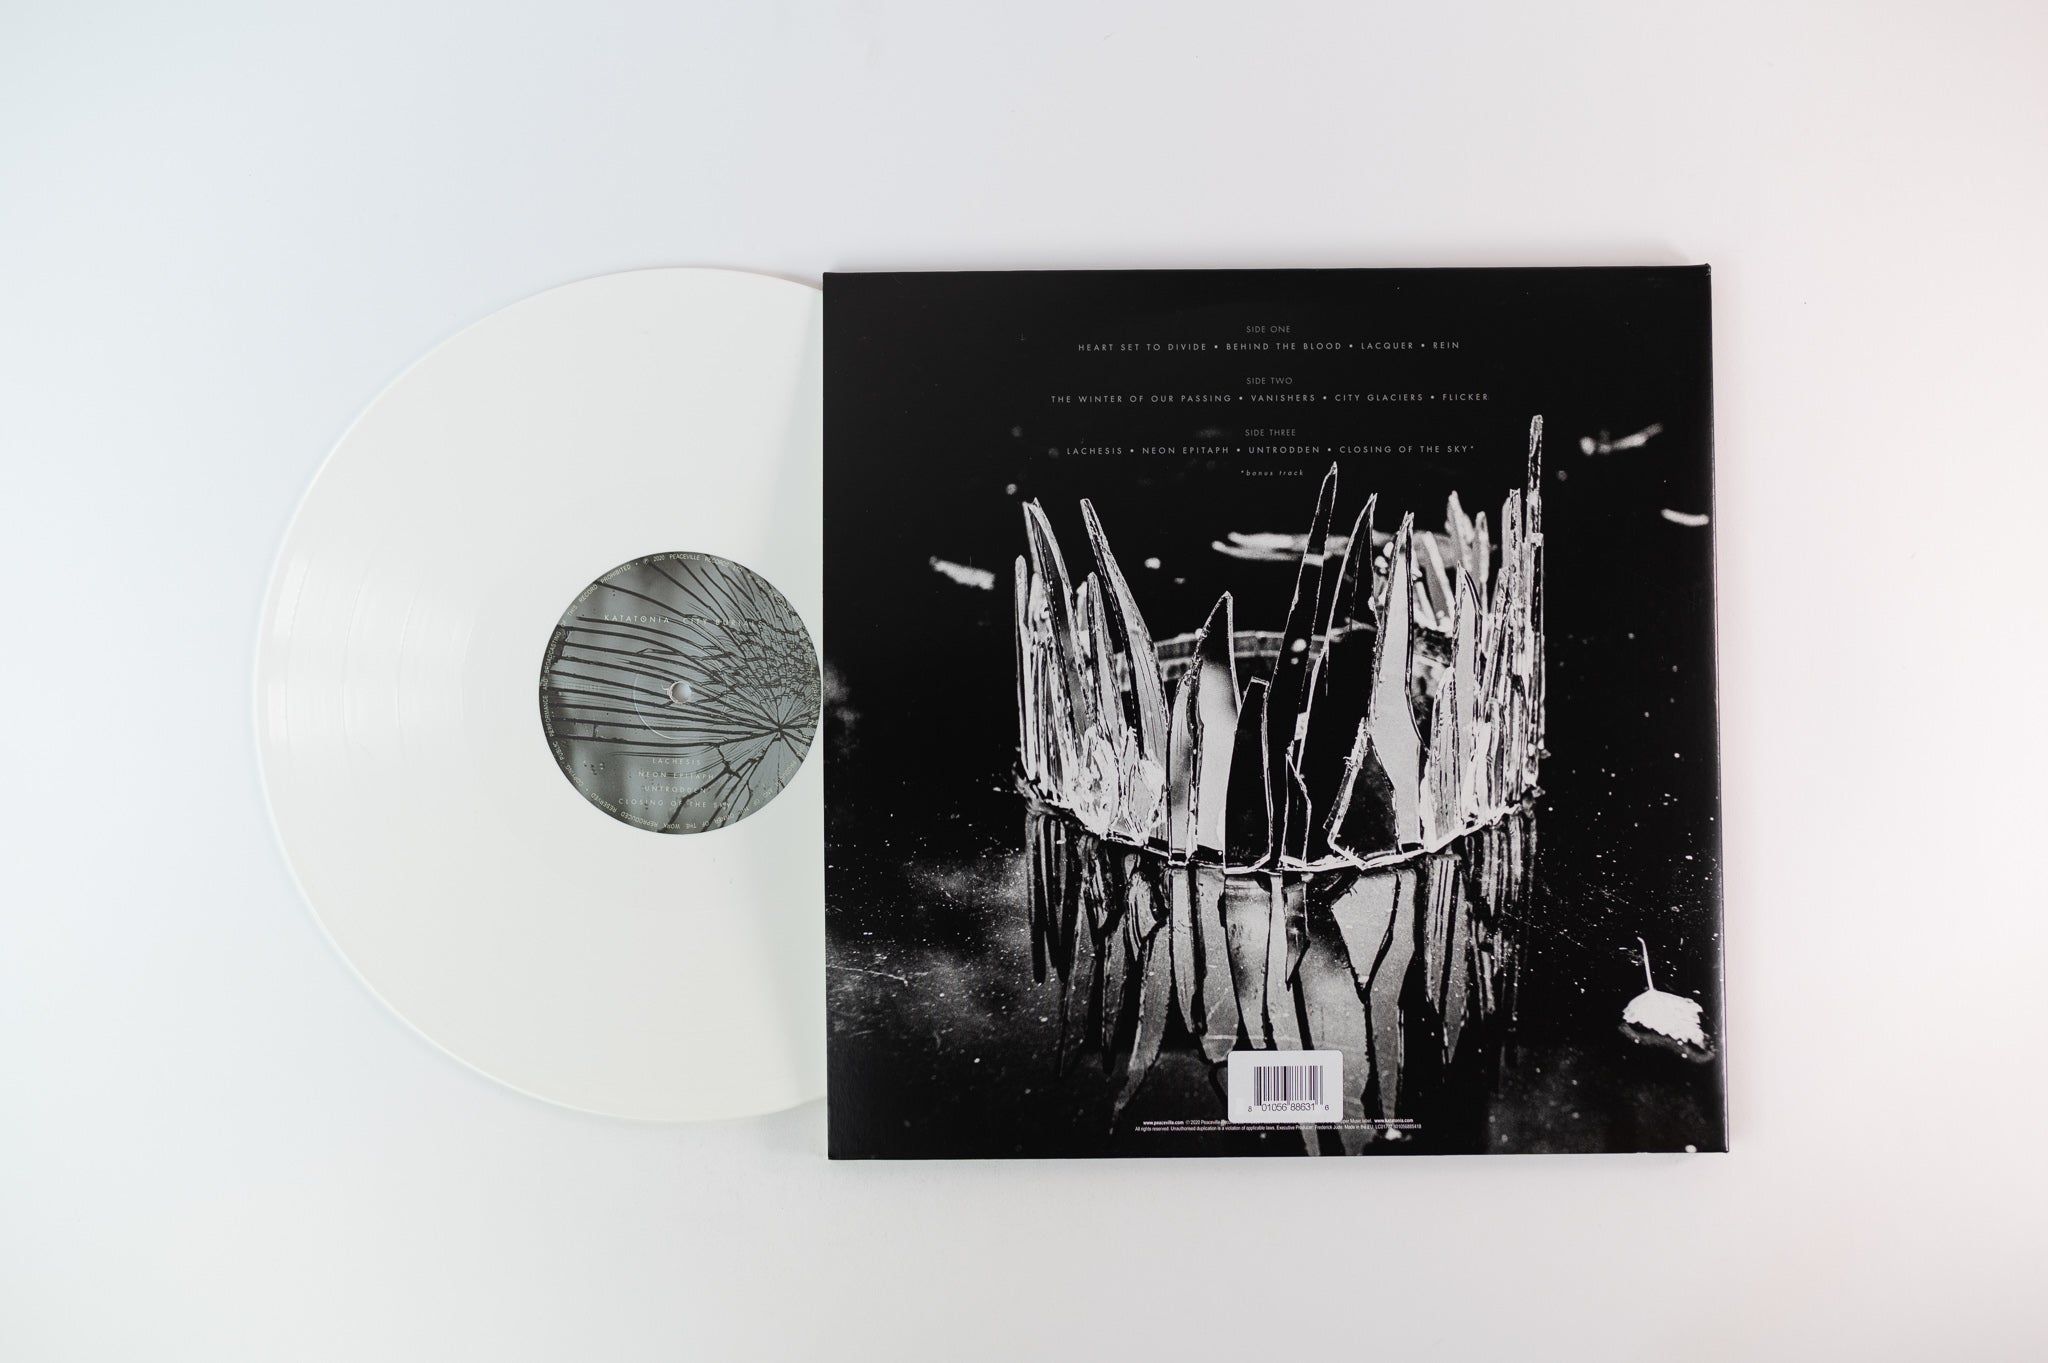 Katatonia - City Burials on Peaceville - White Vinyl